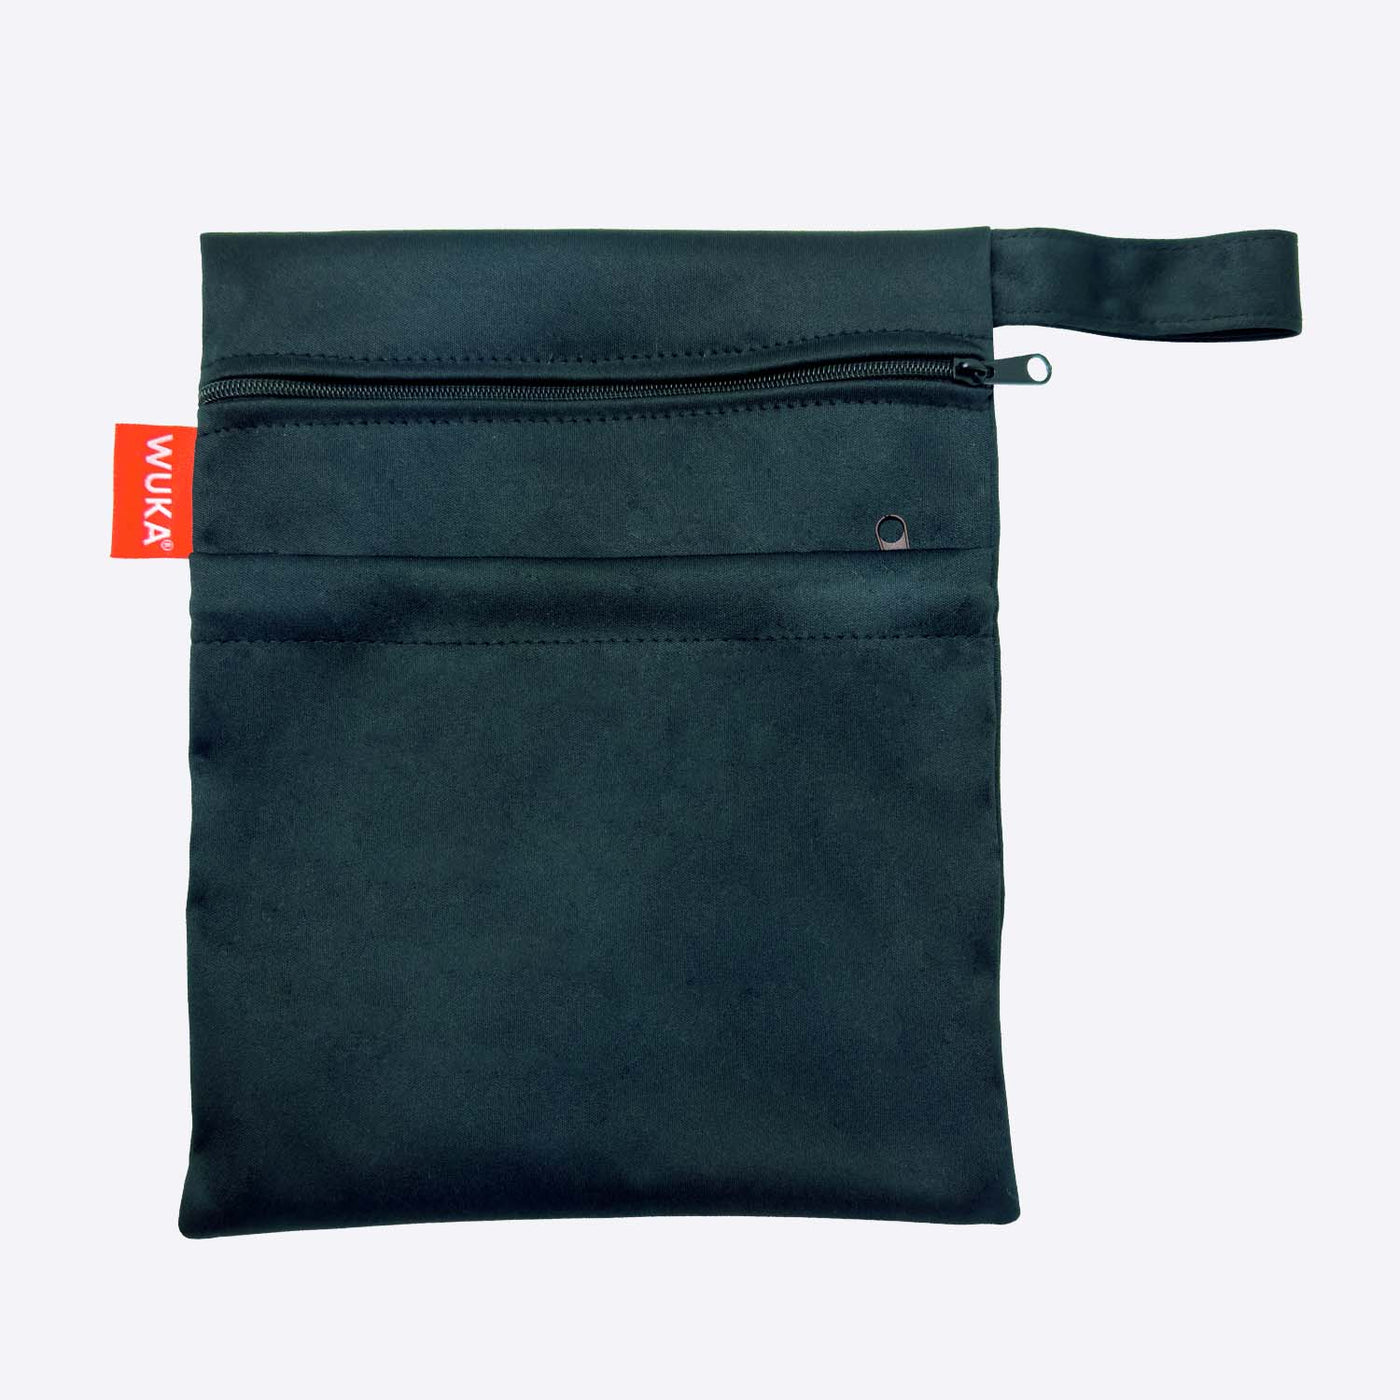 WUKA Period Teen Sleep Set 2 Pack Two Pocket Change Bag Style Black Colour